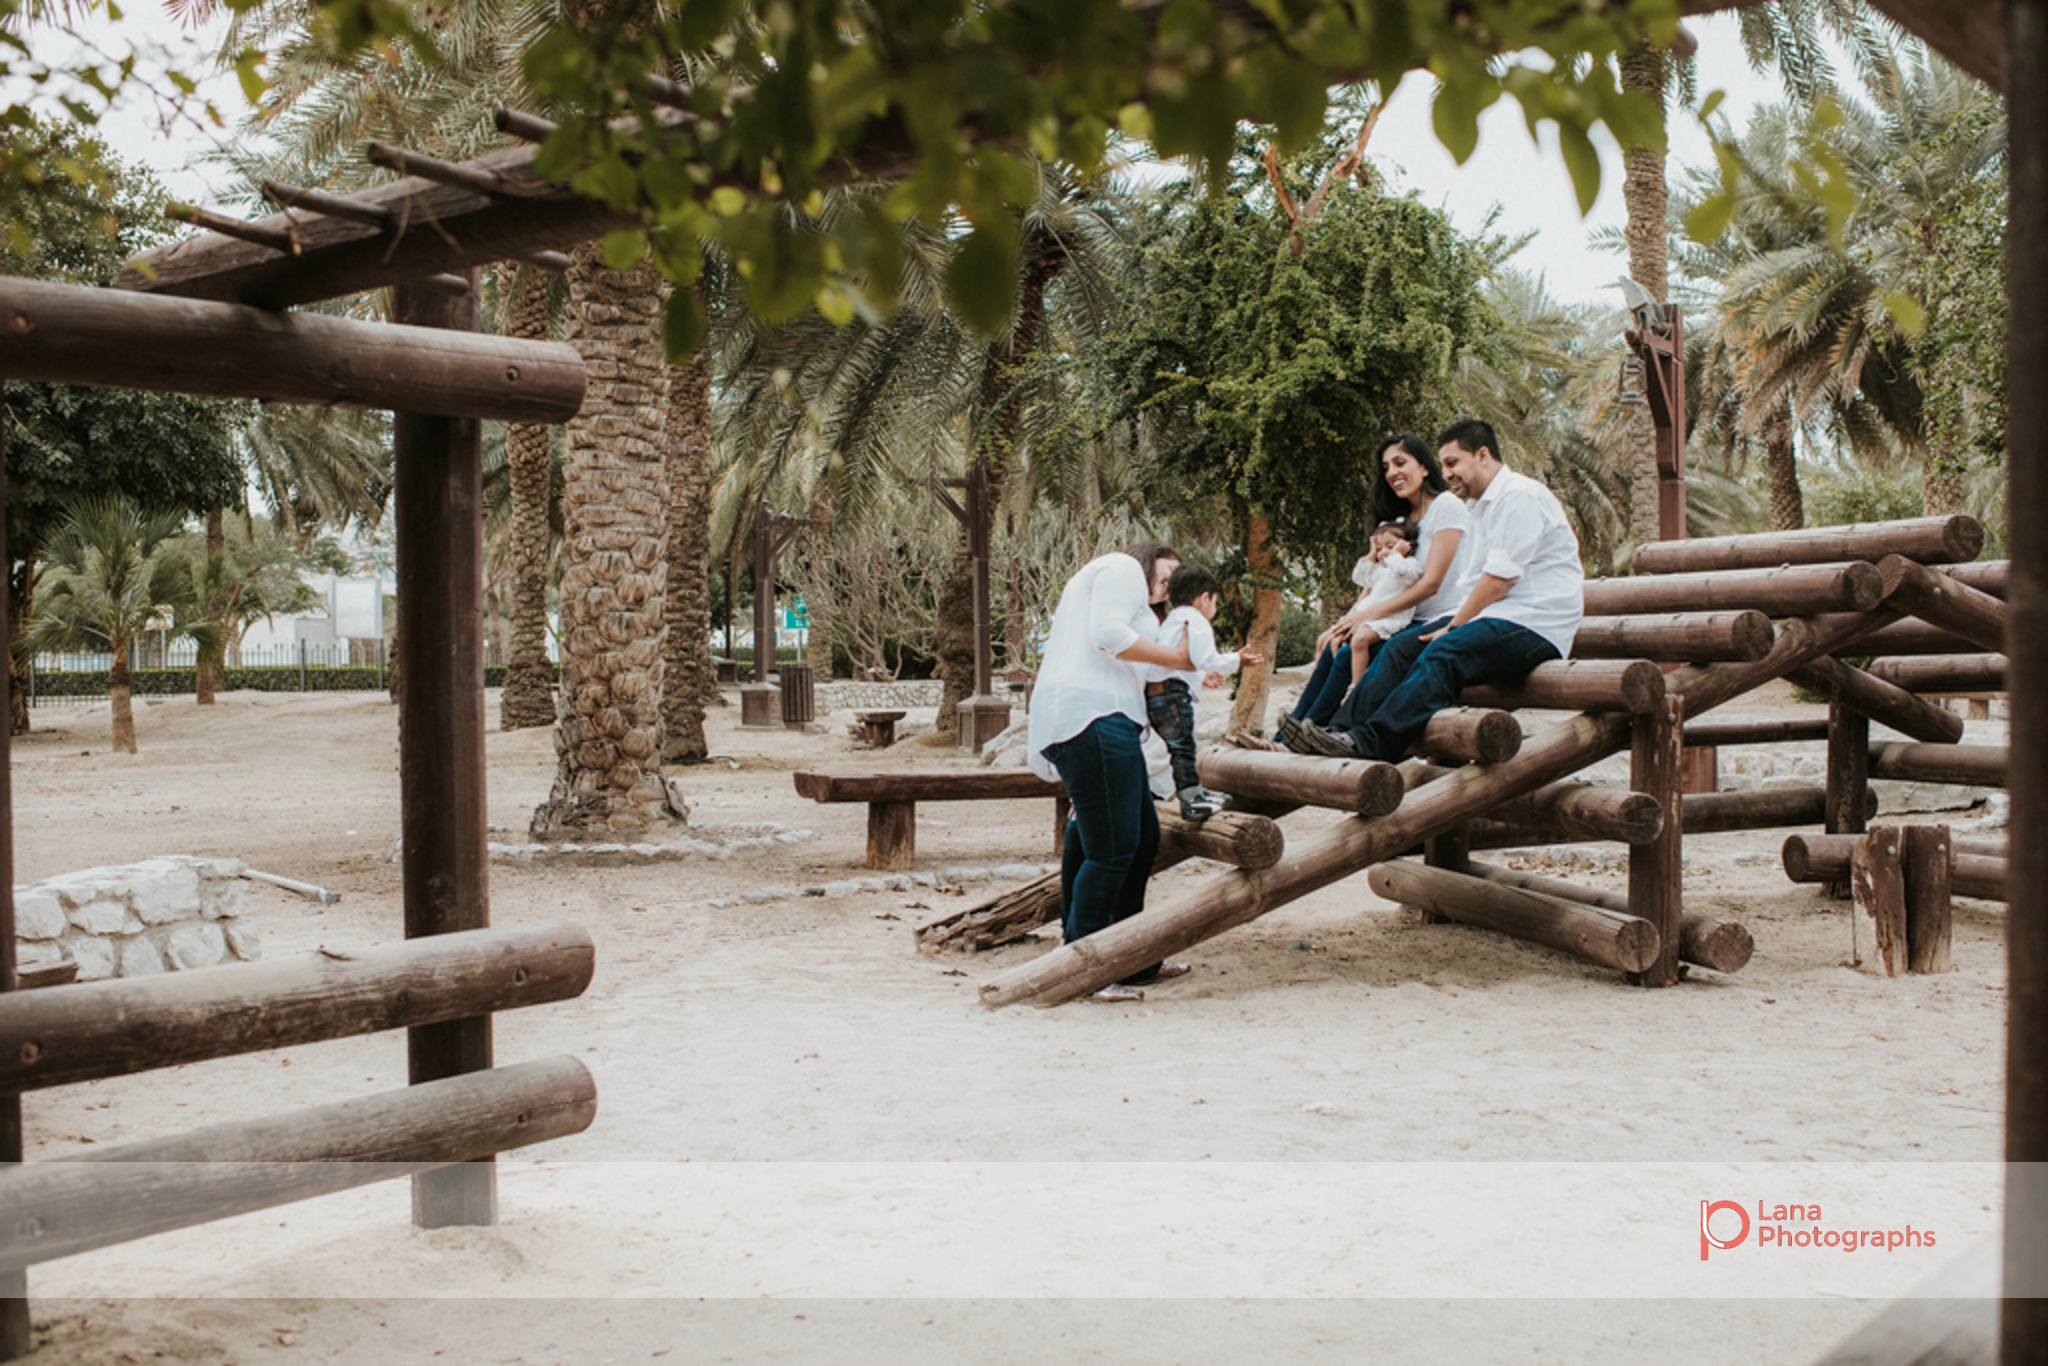 Lana Photographs Family Photographer Dubai Top Family Photographers family sitting in the park on benches